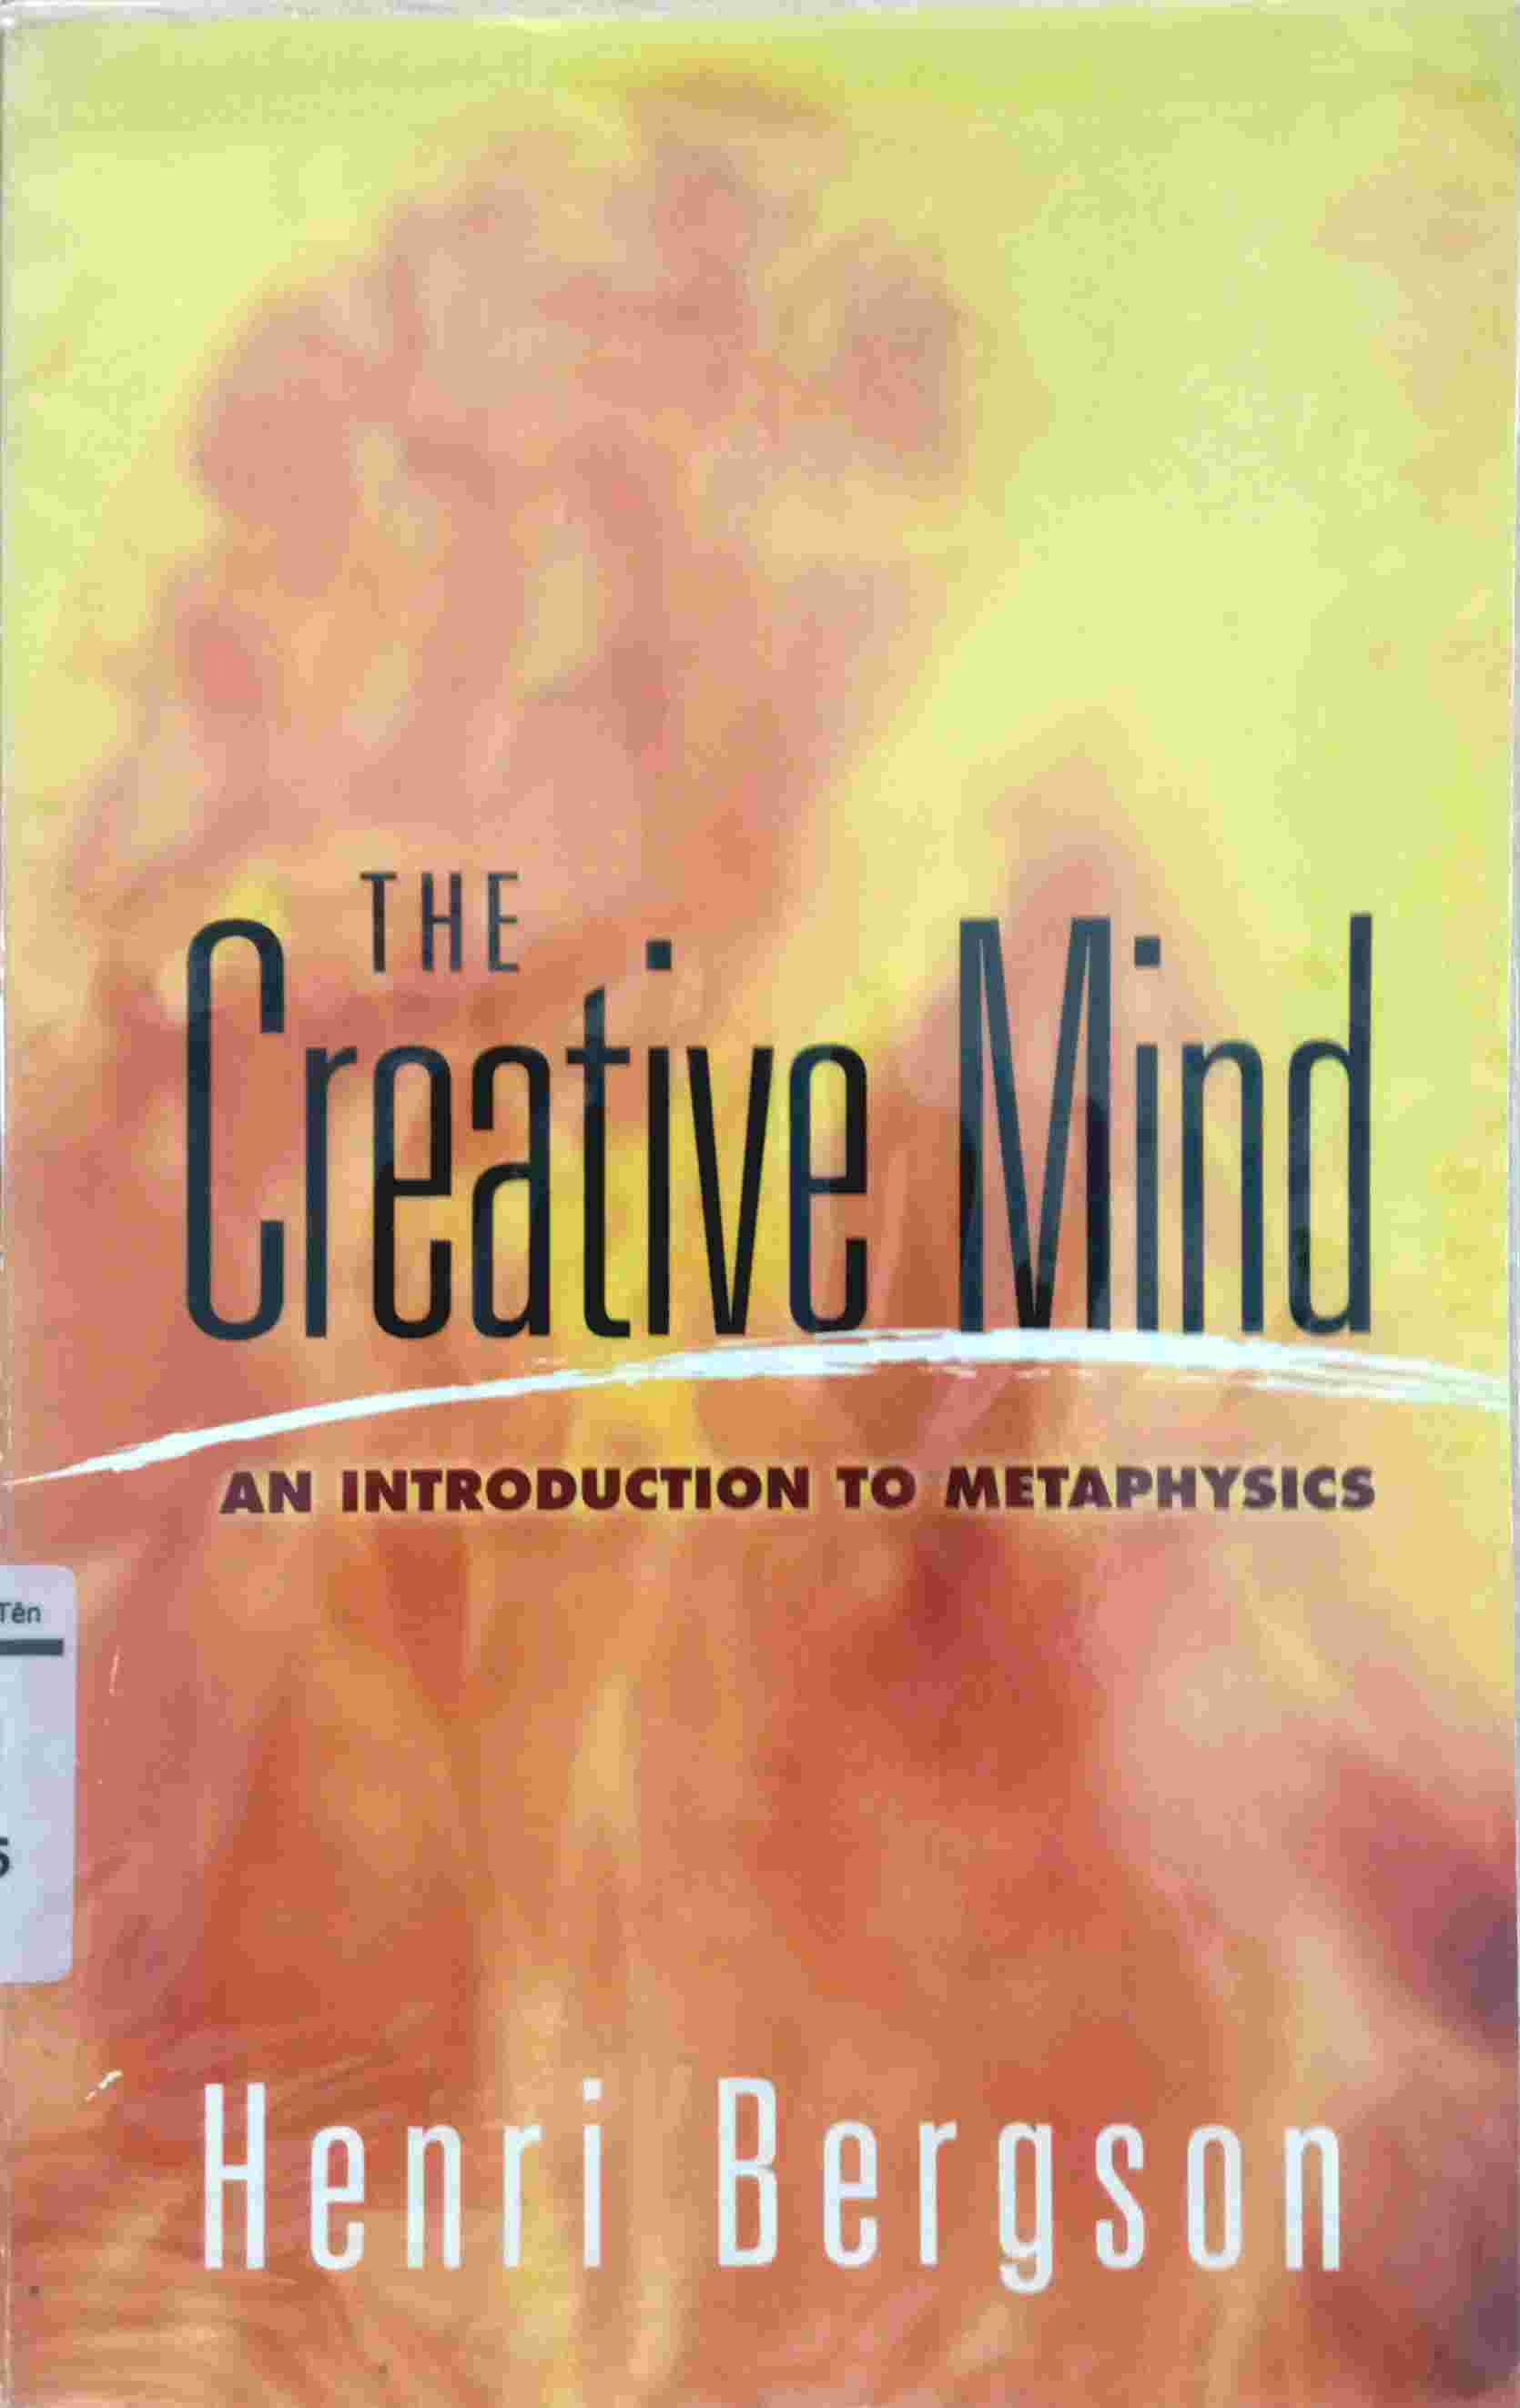 THE CREATIVE MIND